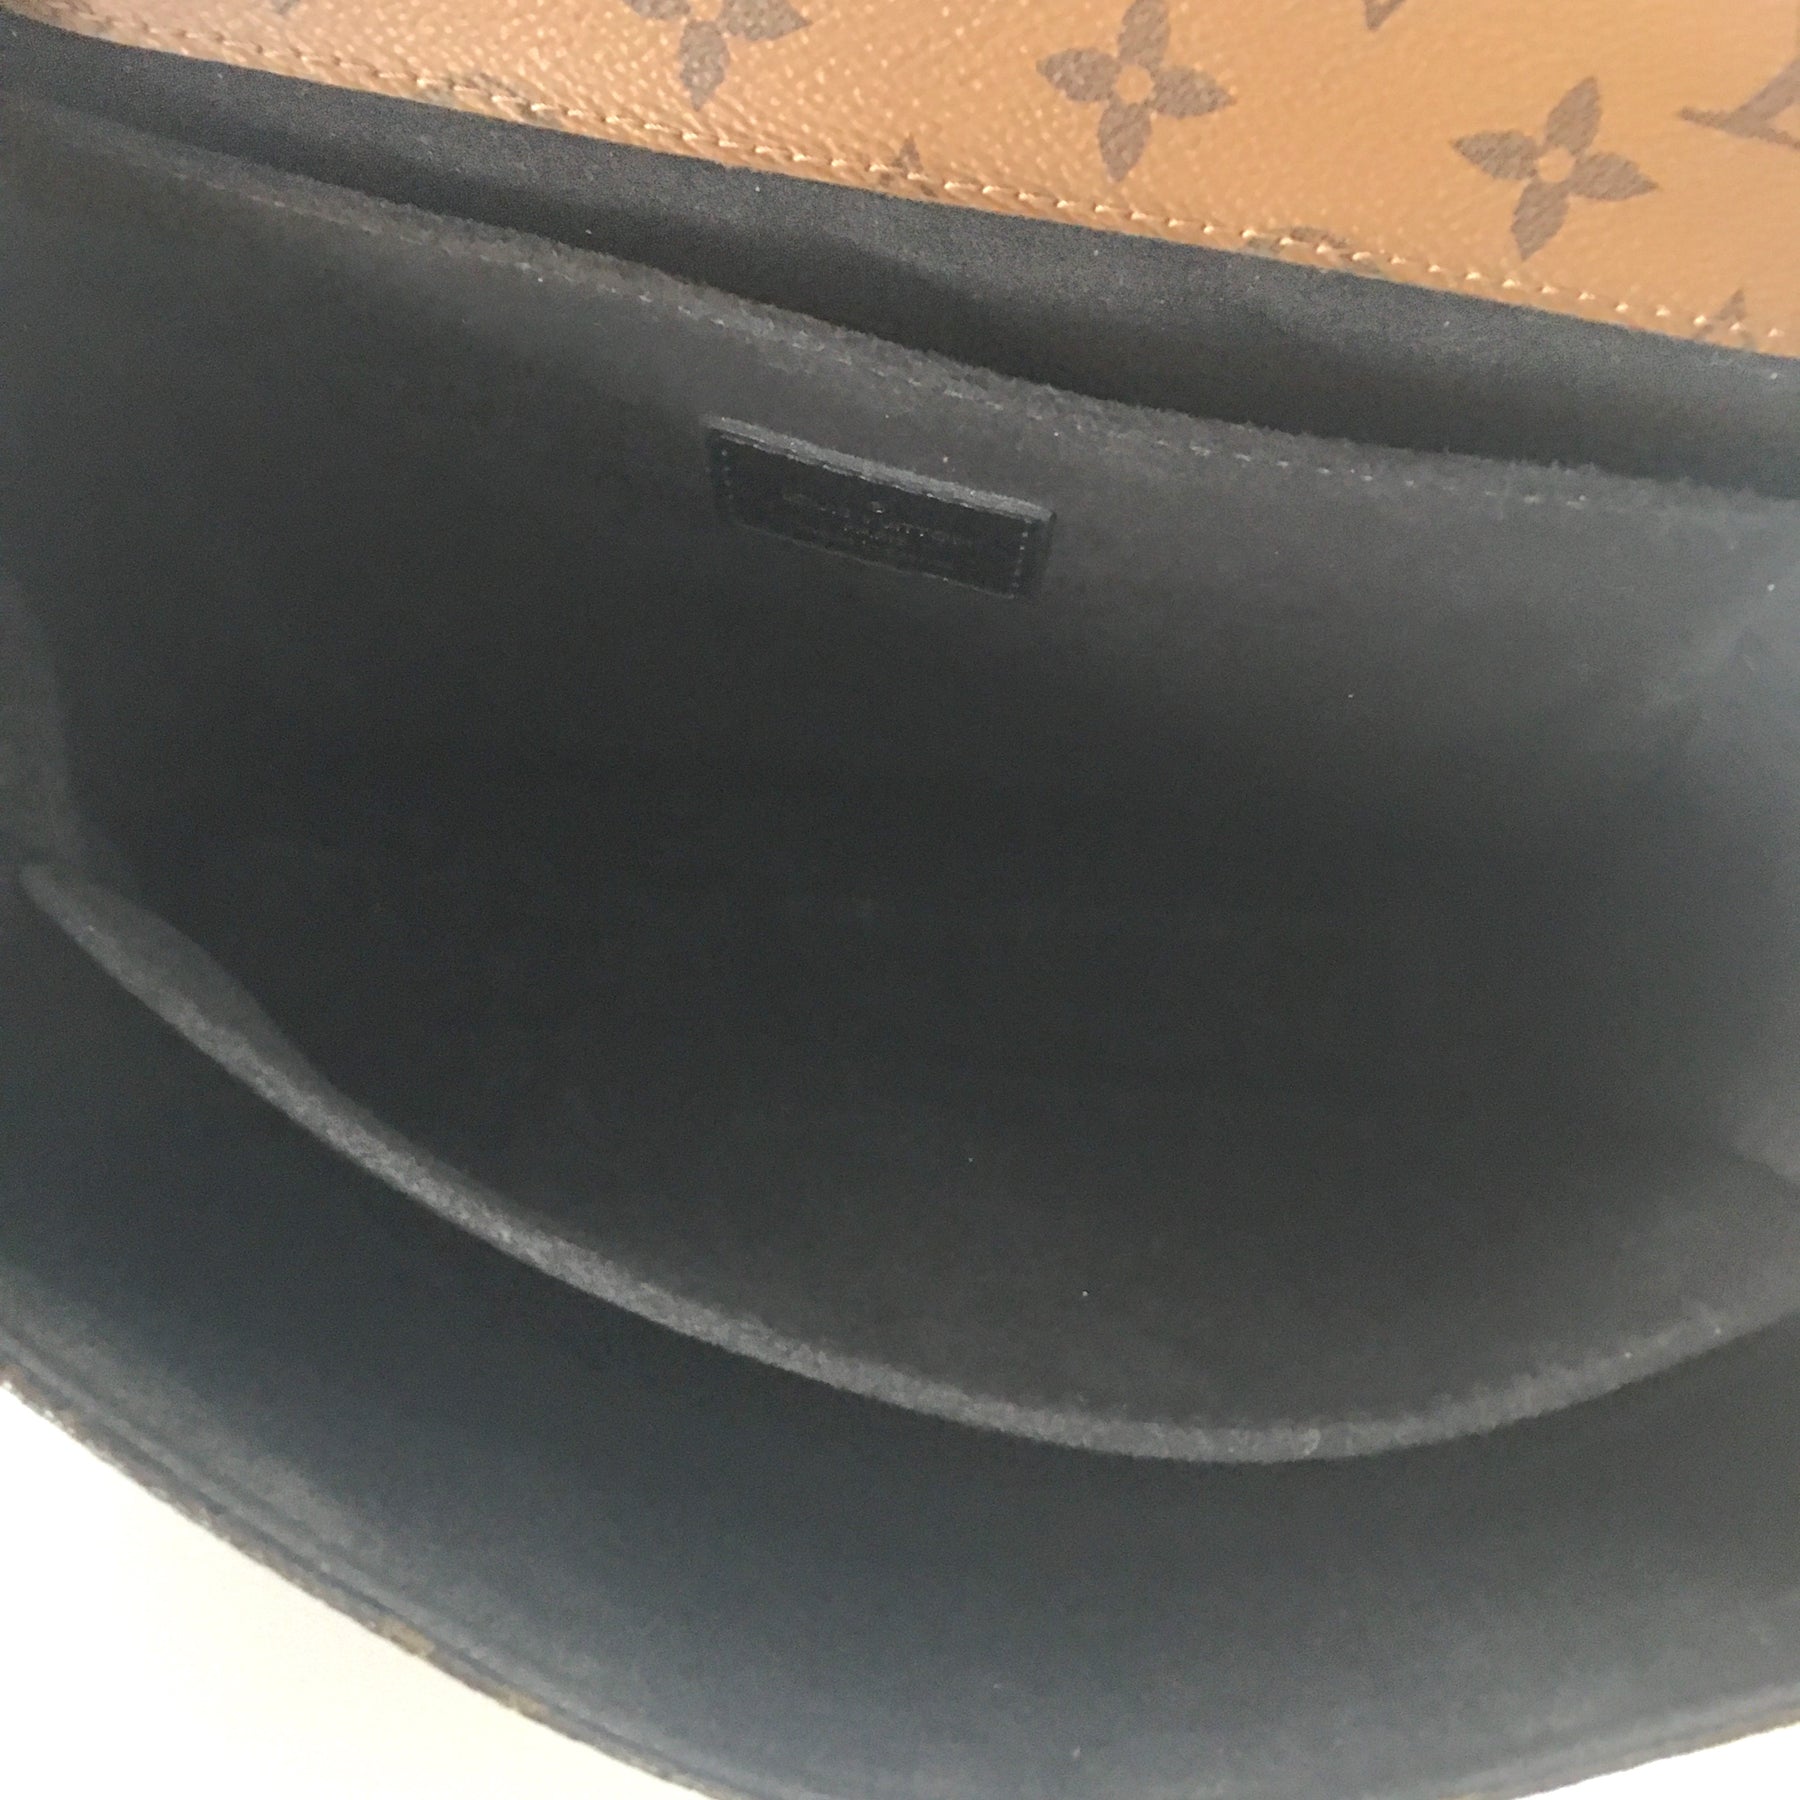 Metis crossbody bag Louis Vuitton Brown in Plastic - 32816166